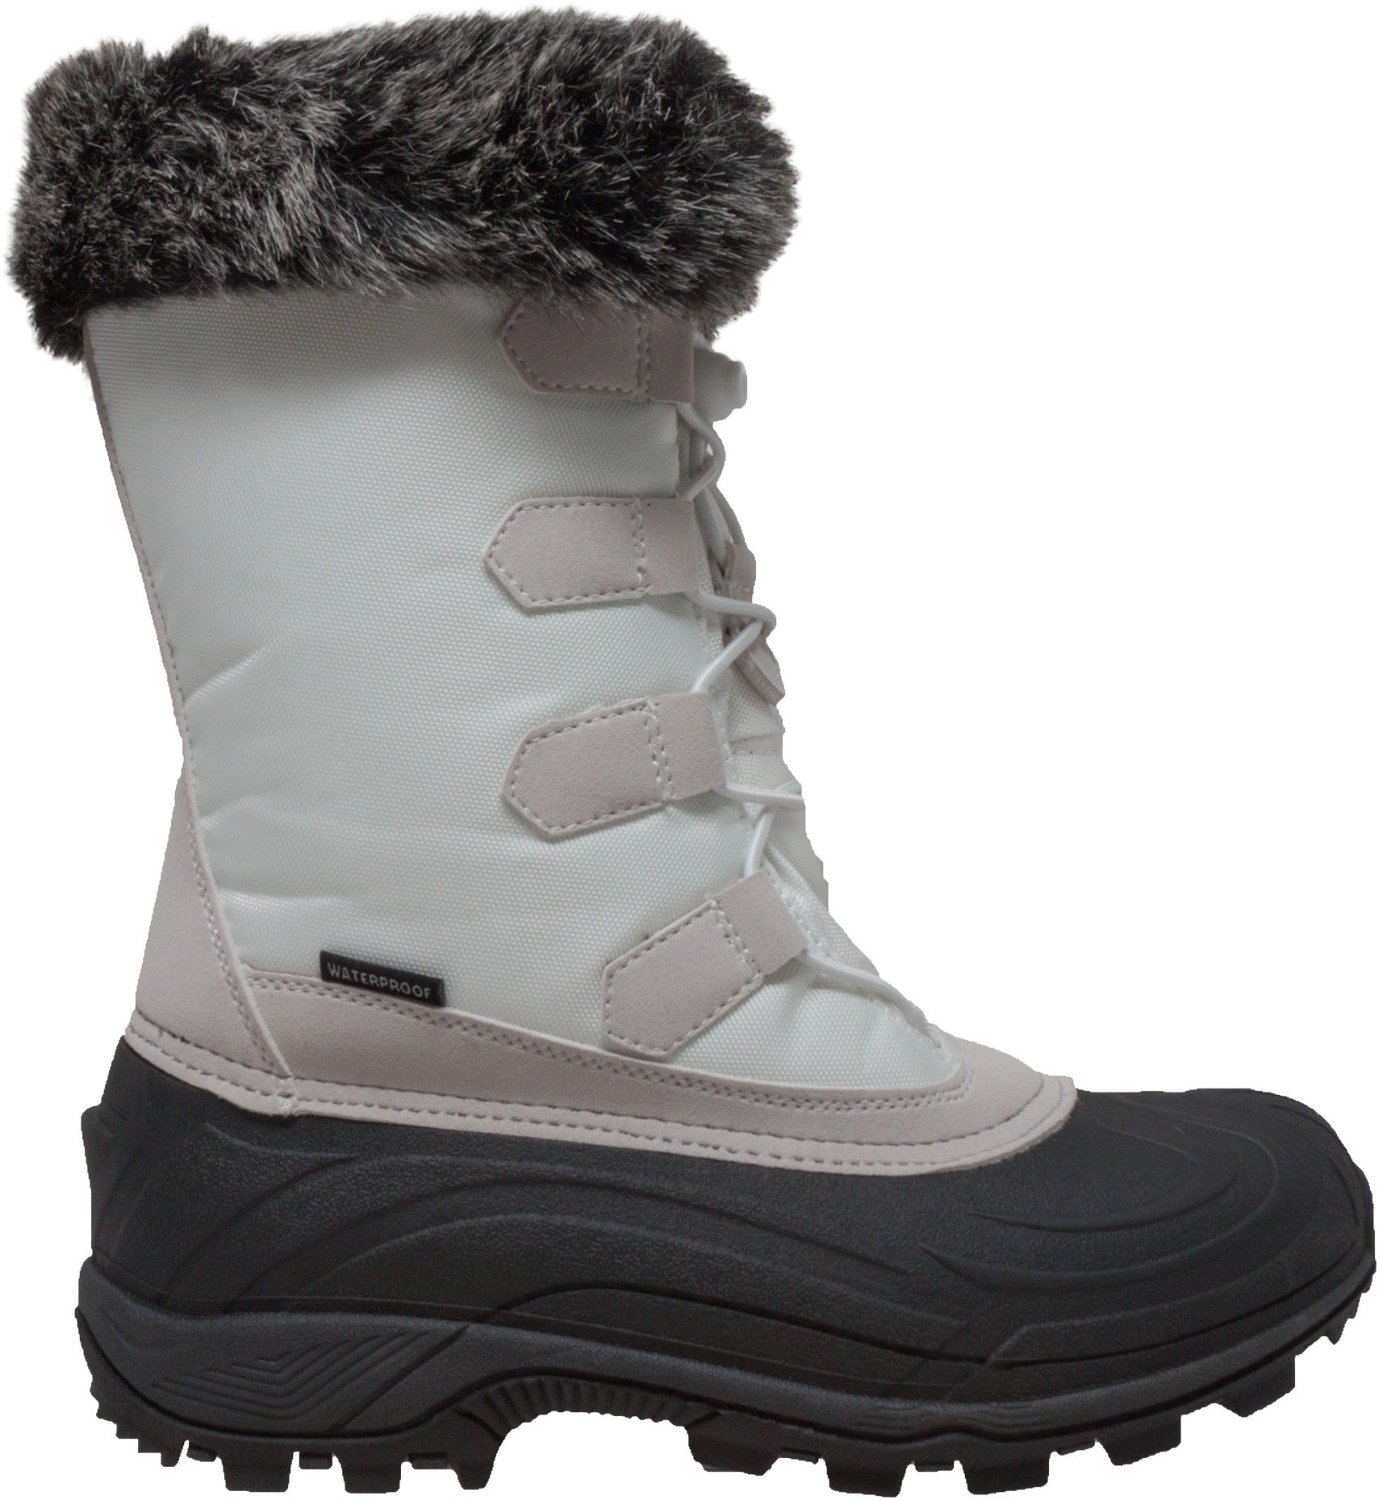 WinterTec Women's Nylon Winter Boots | Free Shipping at Academy